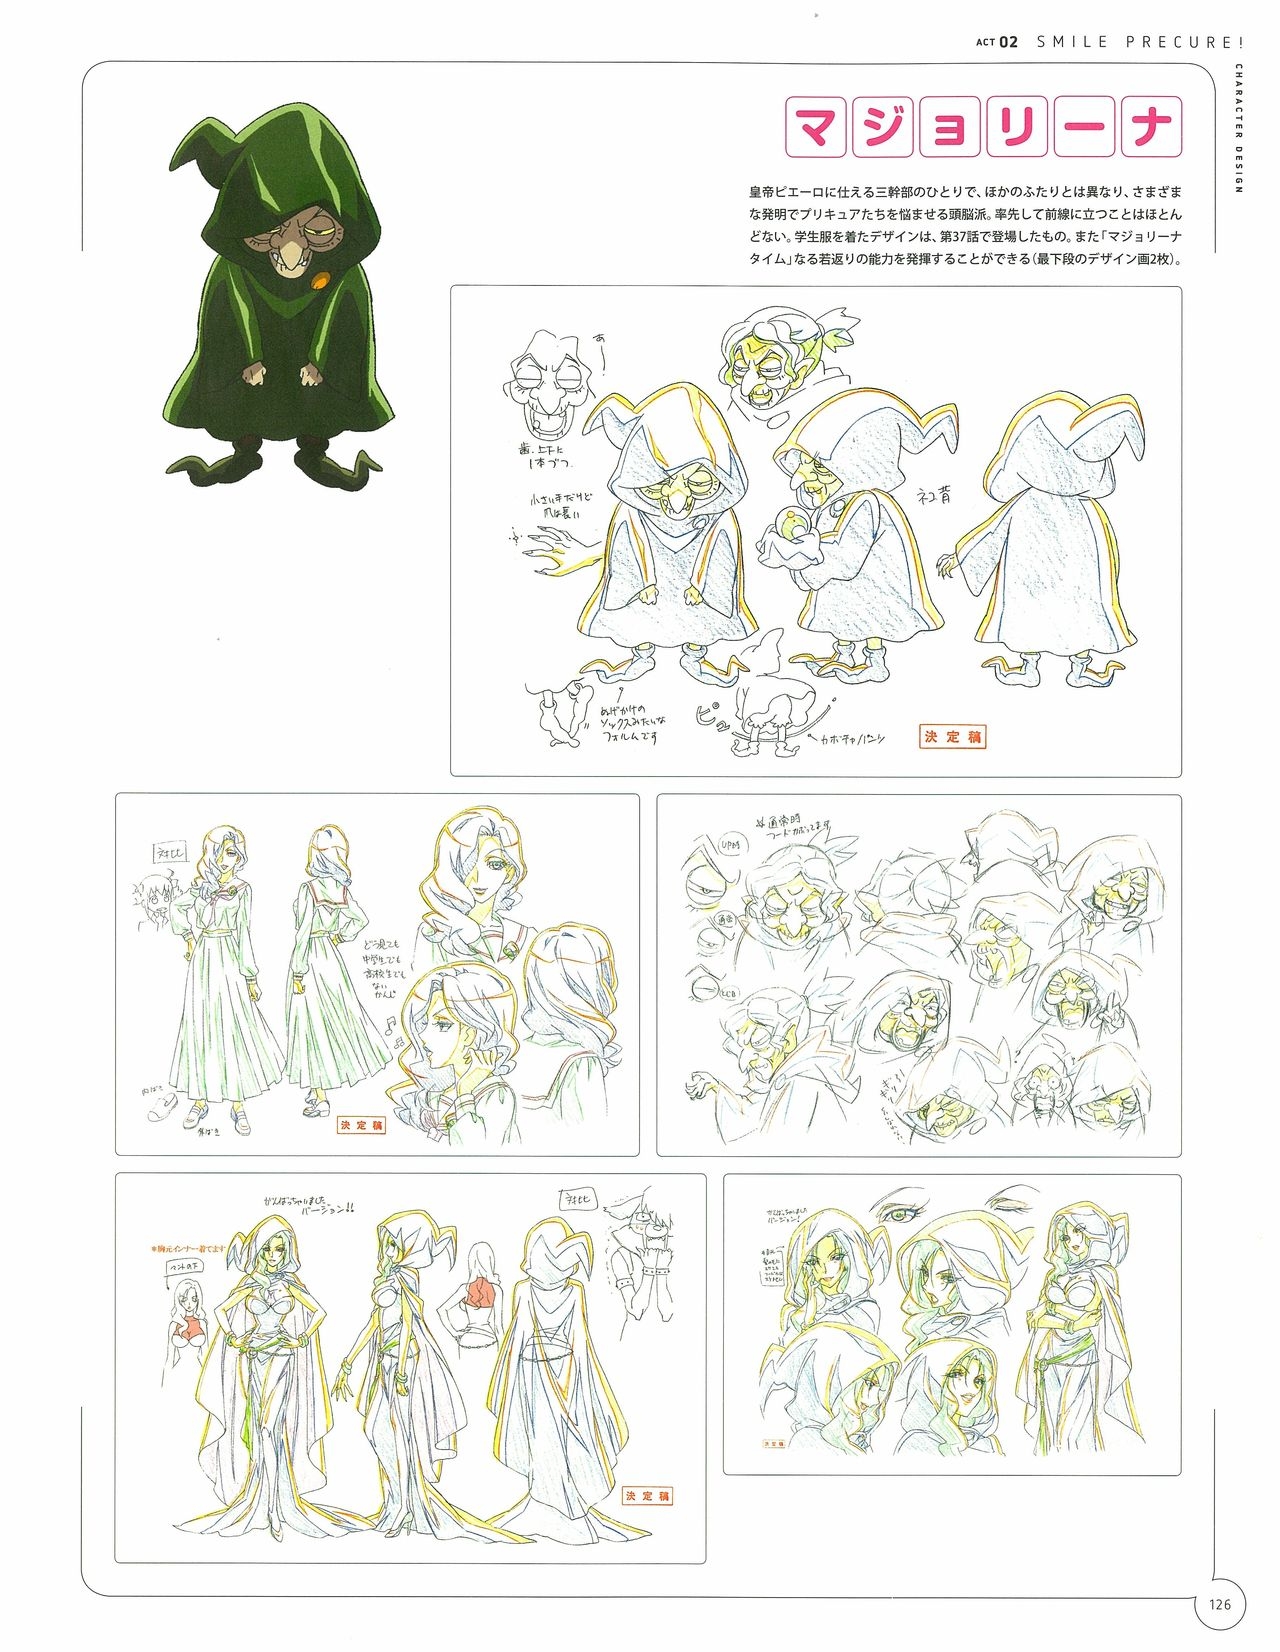 Kawamura Toshie - Toei Animation Precure Works 126